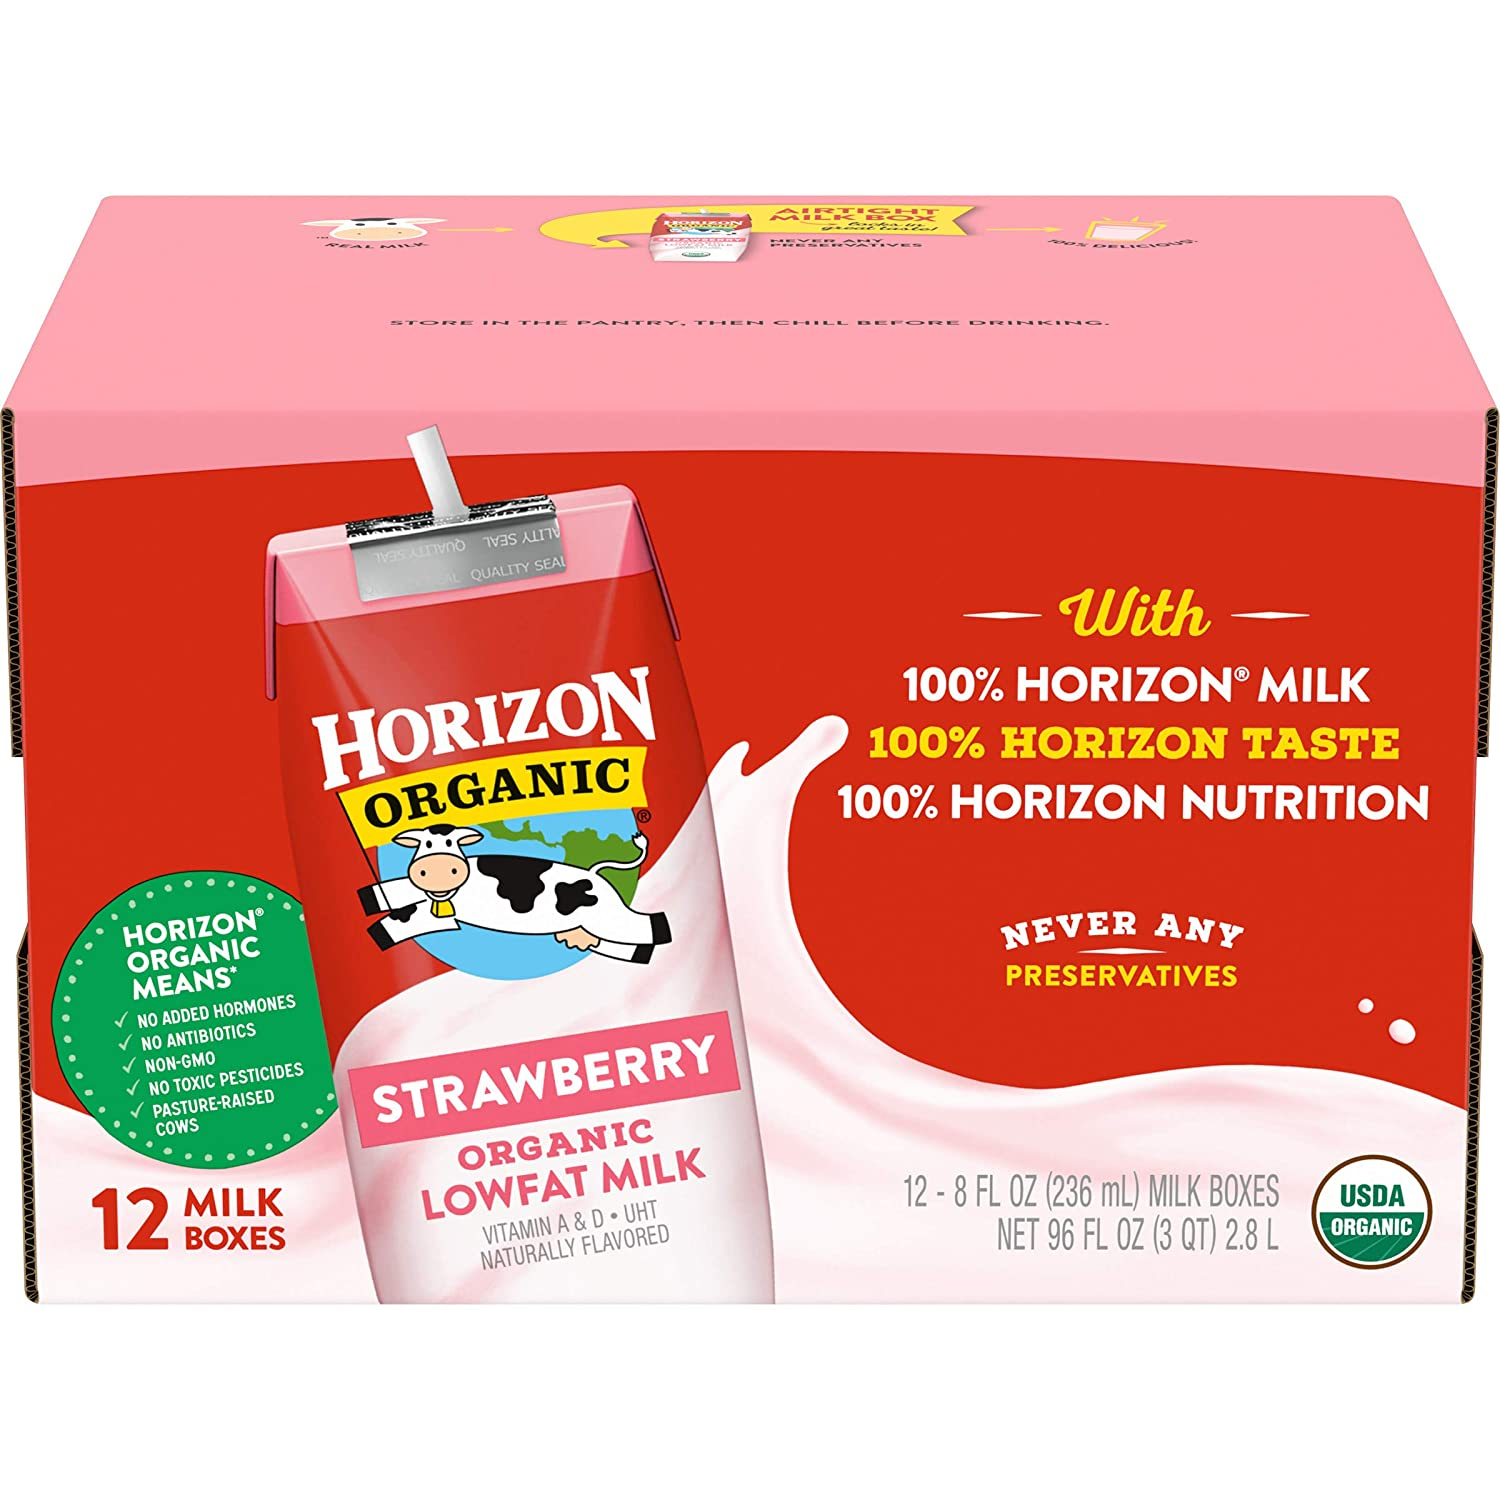 Horizon Organic 1% Lowfat Strawberry Milk 12 units per case 96.0 fl